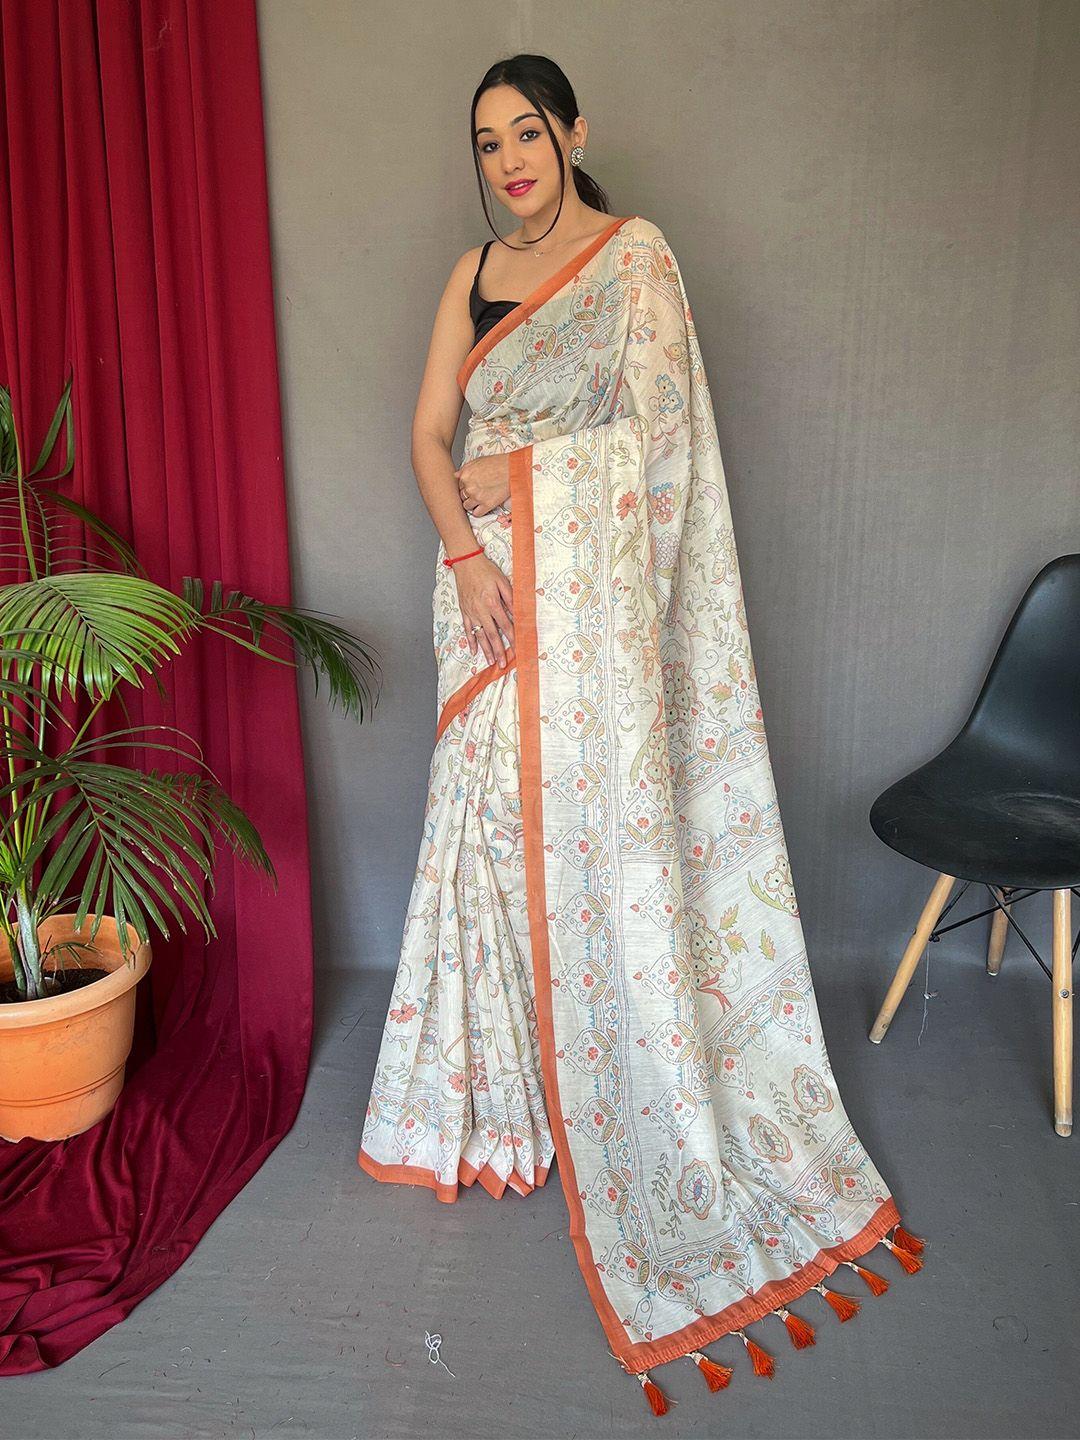 munir floral printed pure cotton saree